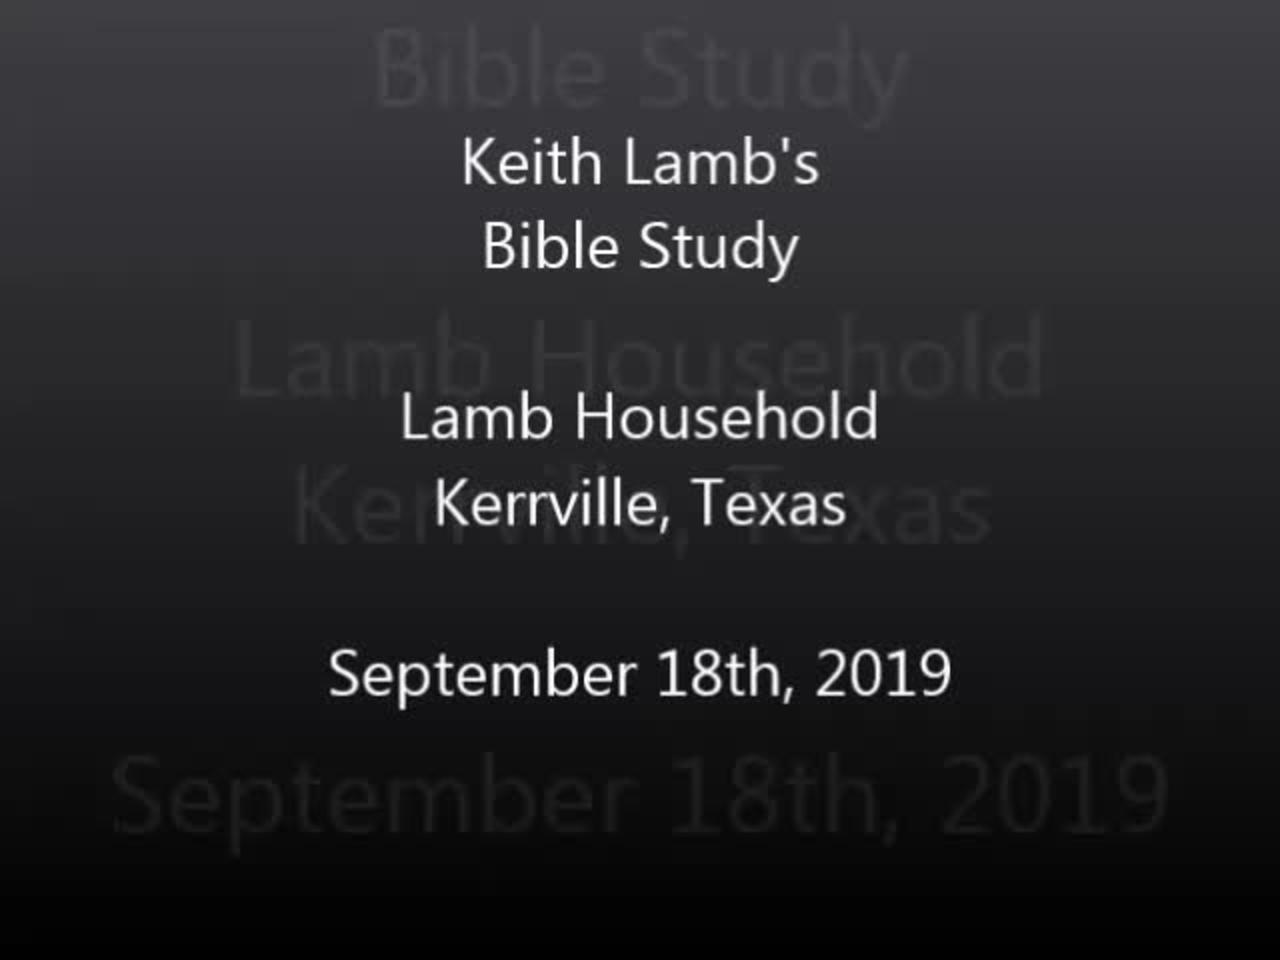 Bible Study at the Lamb's part 1